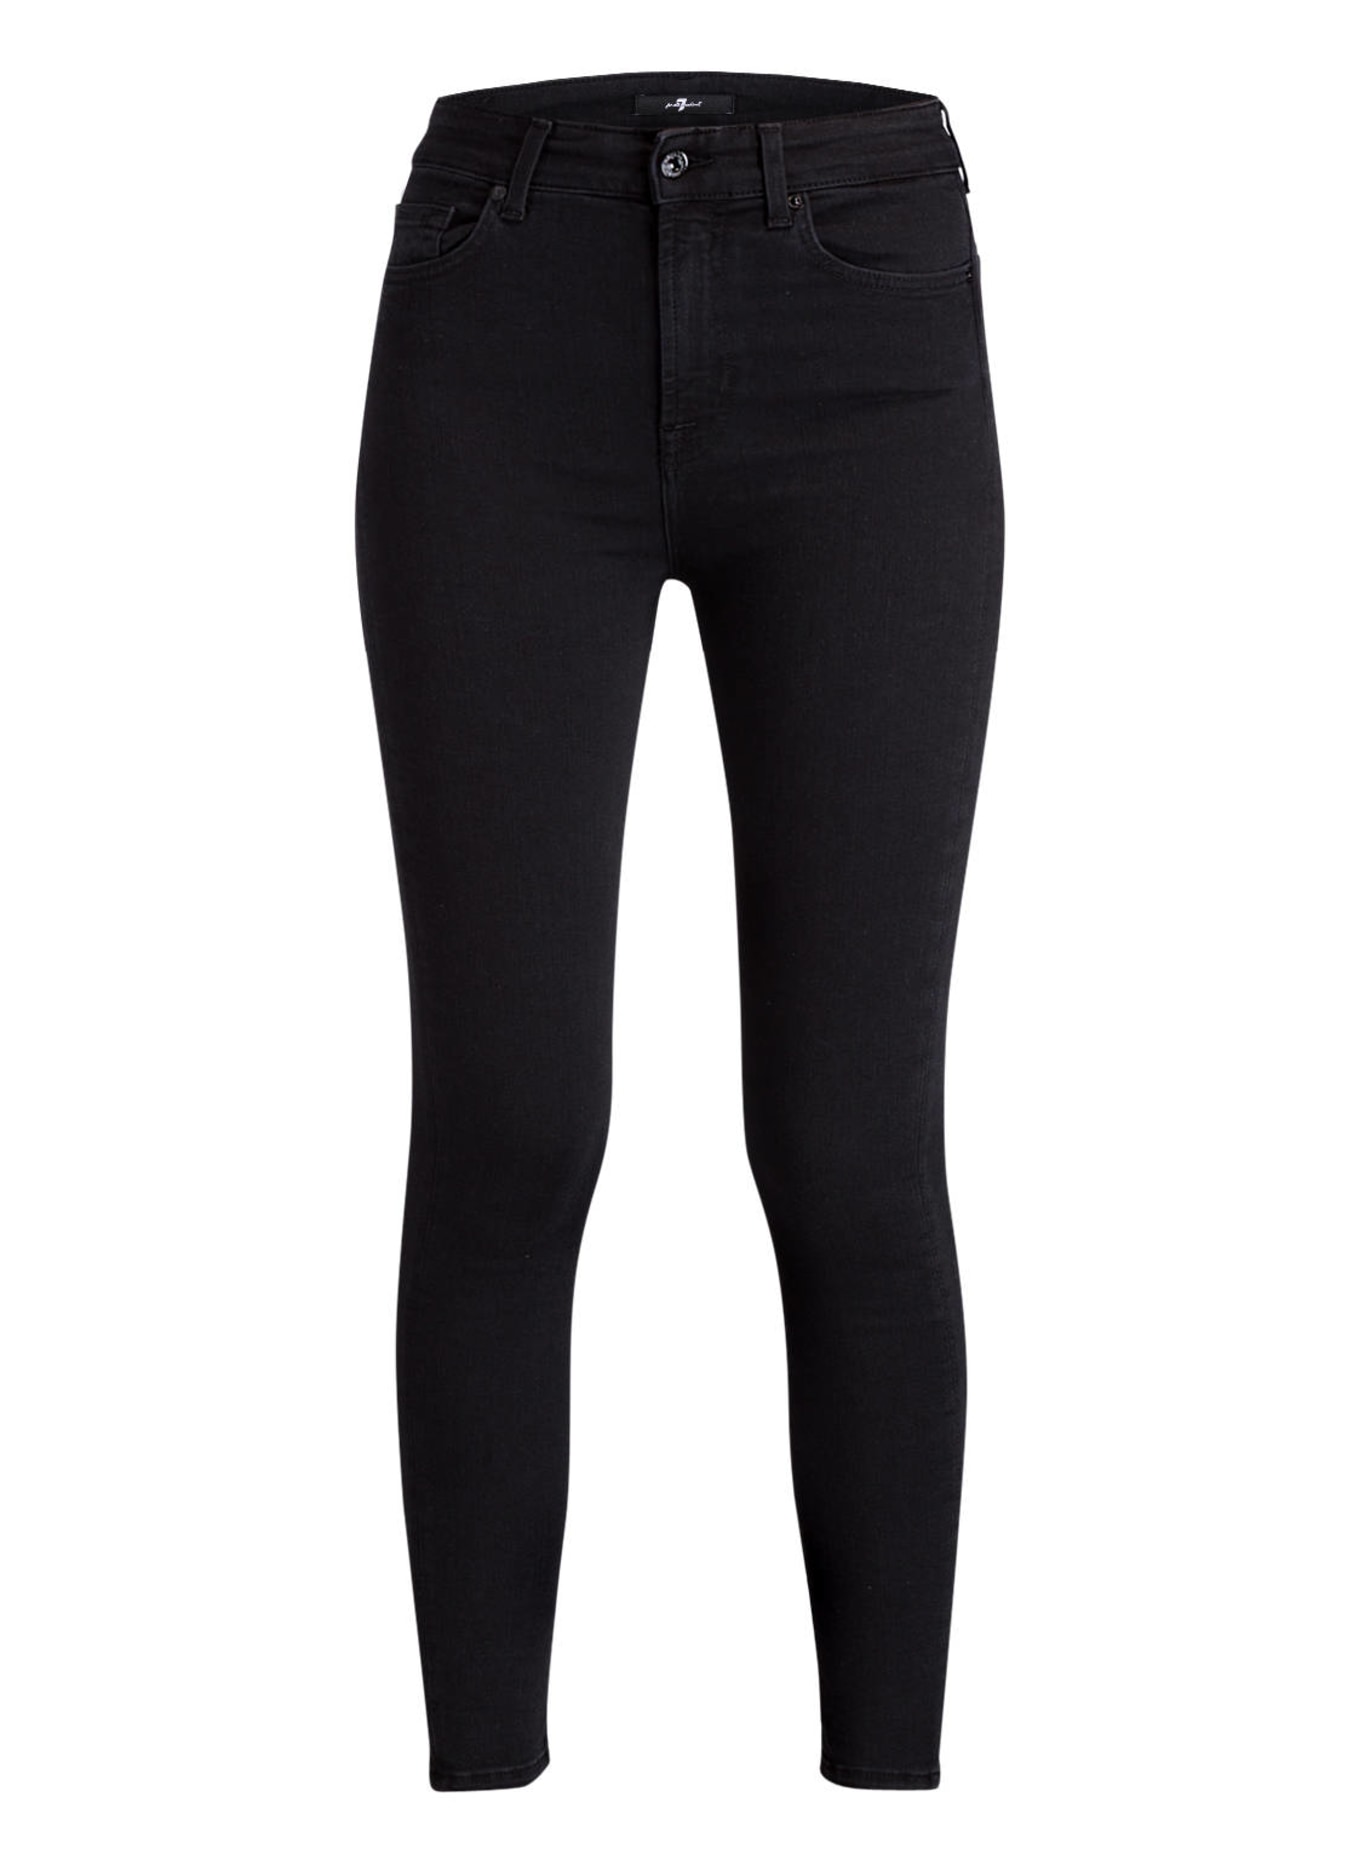 7 for all mankind Skinny-Jeans AUBREY, Farbe: SLIM ILLUSSION LUXE GRAVITY BLACK (Bild 1)